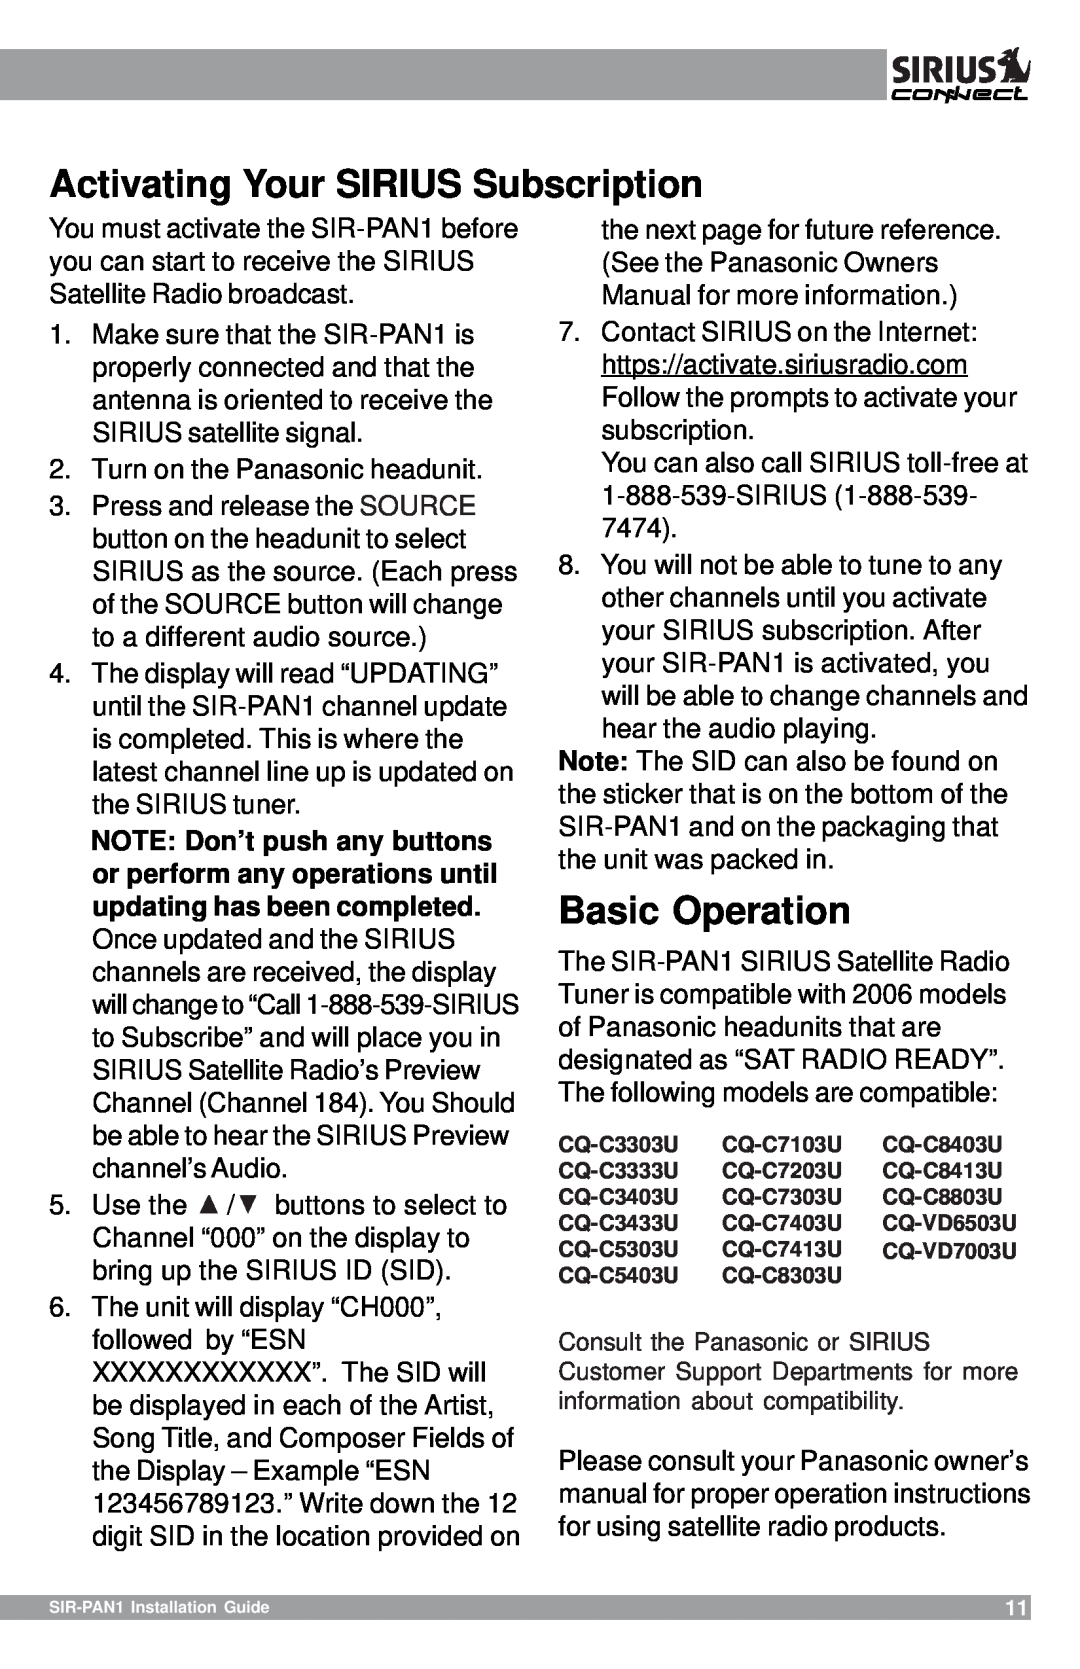 Sirius Satellite Radio SIR-PAN1 manual Activating Your SIRIUS Subscription, Basic Operation 